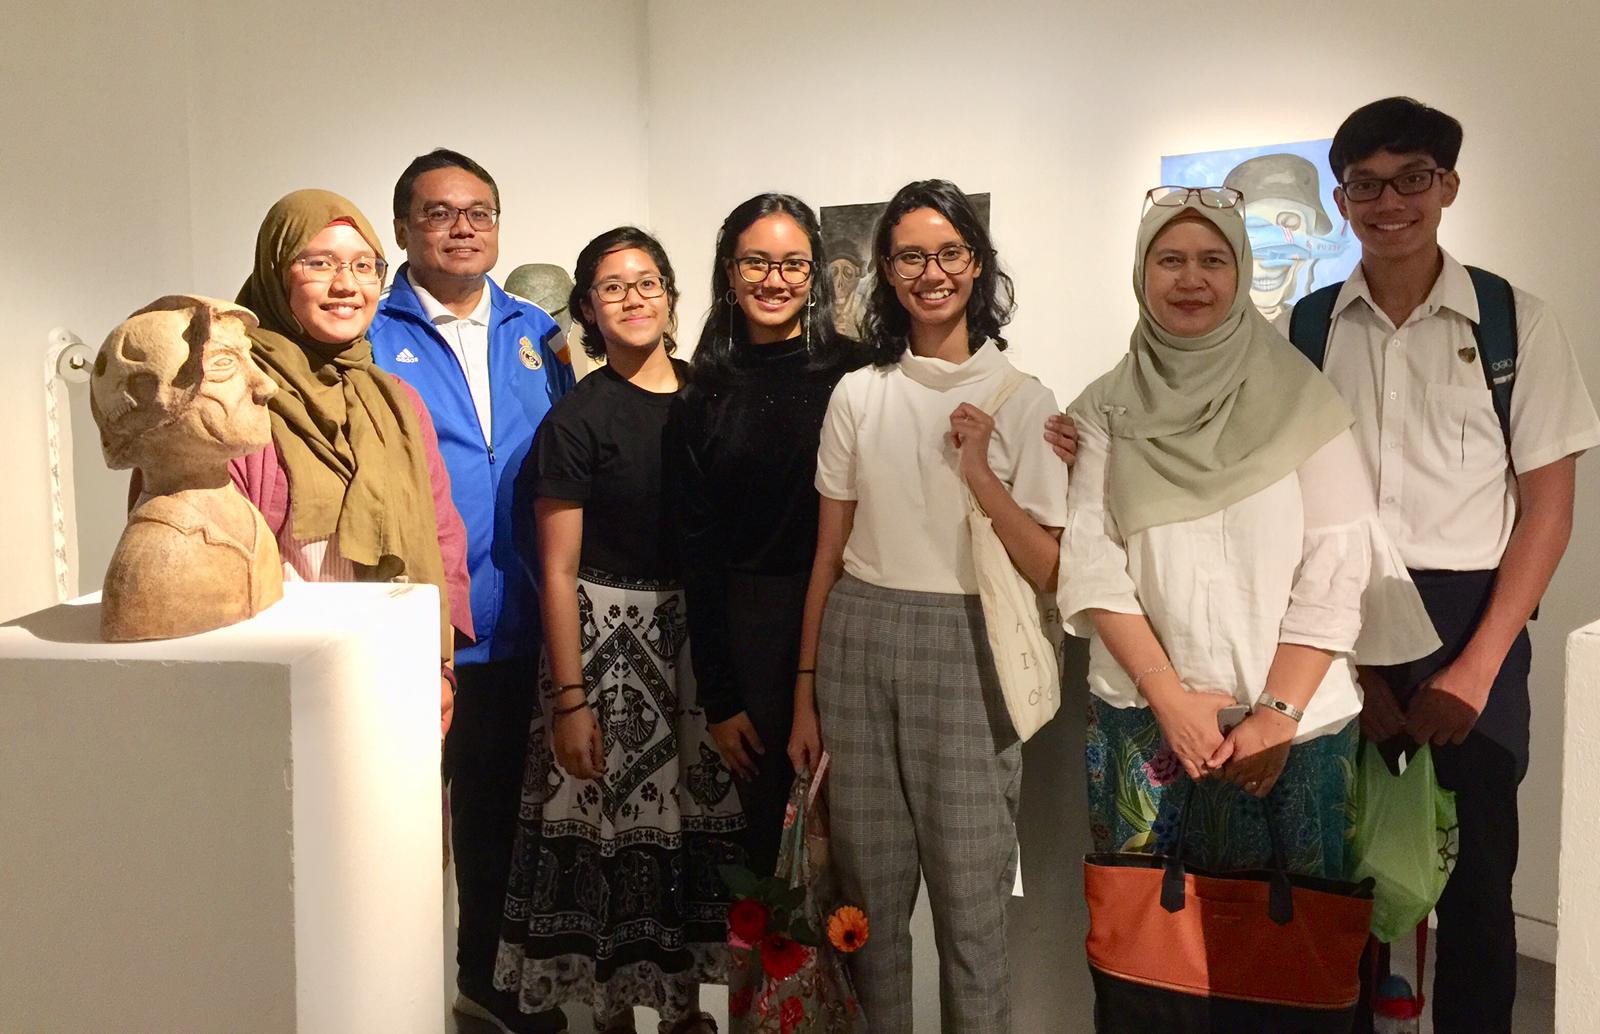 Sarah and her family at the SOTA IB Visual Arts Graduating Cohort Showcase 2019